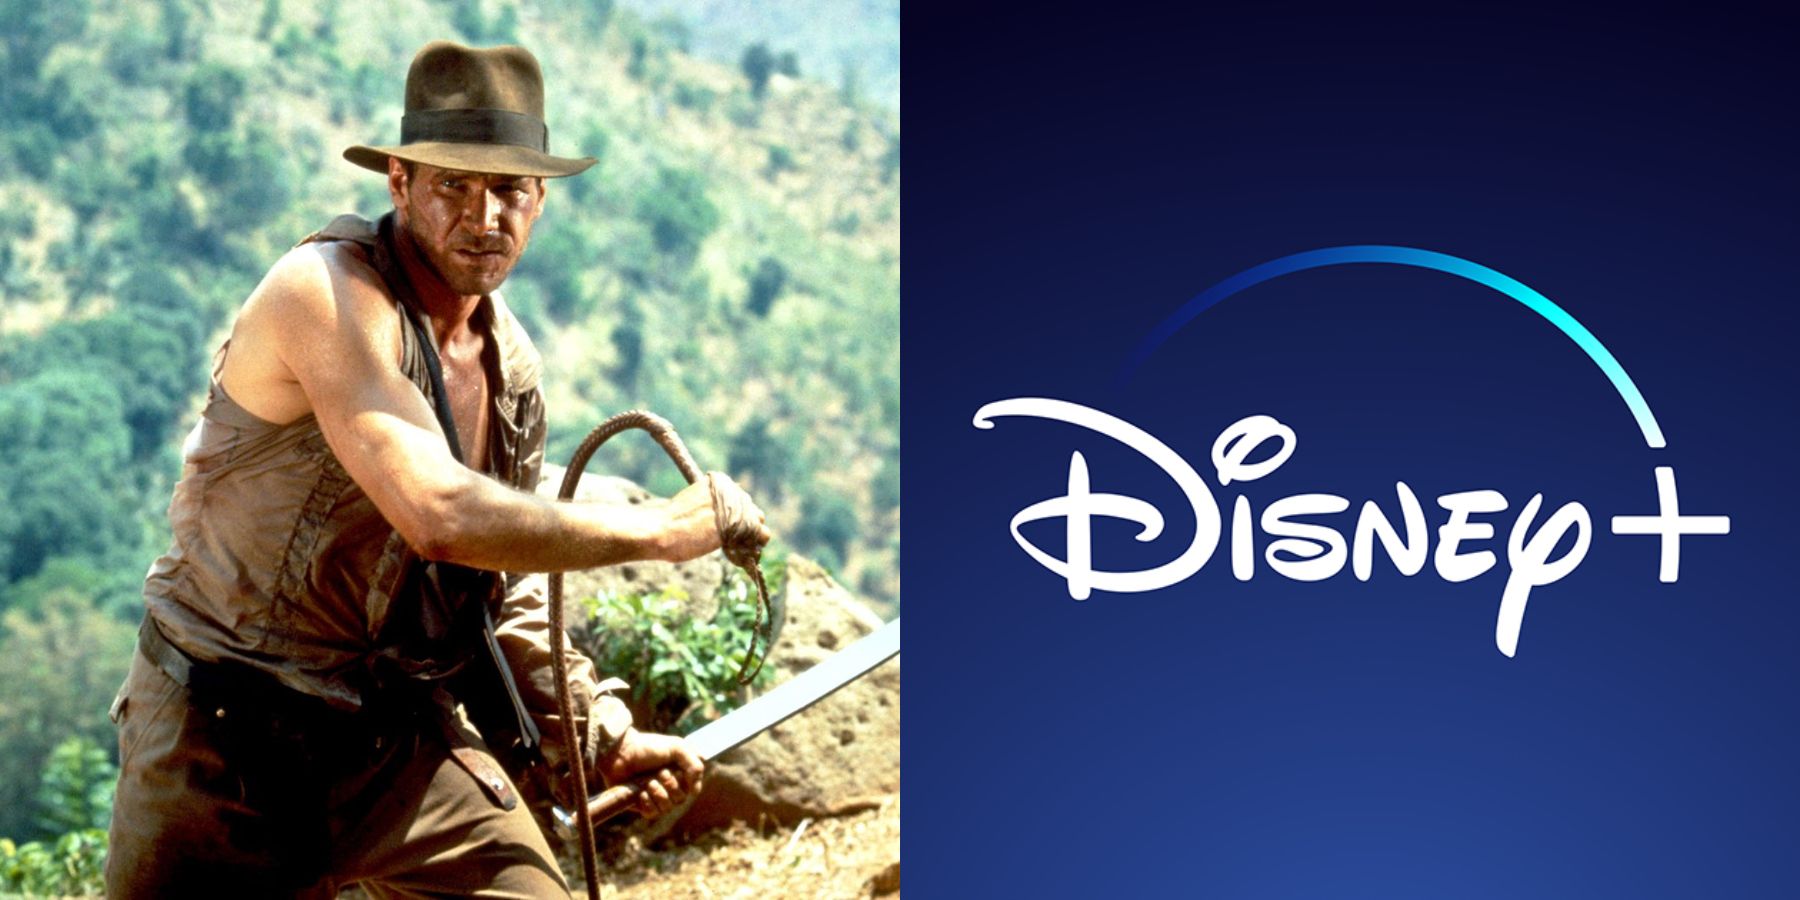 Indiana Jones TV Show Coming to Disney Plus